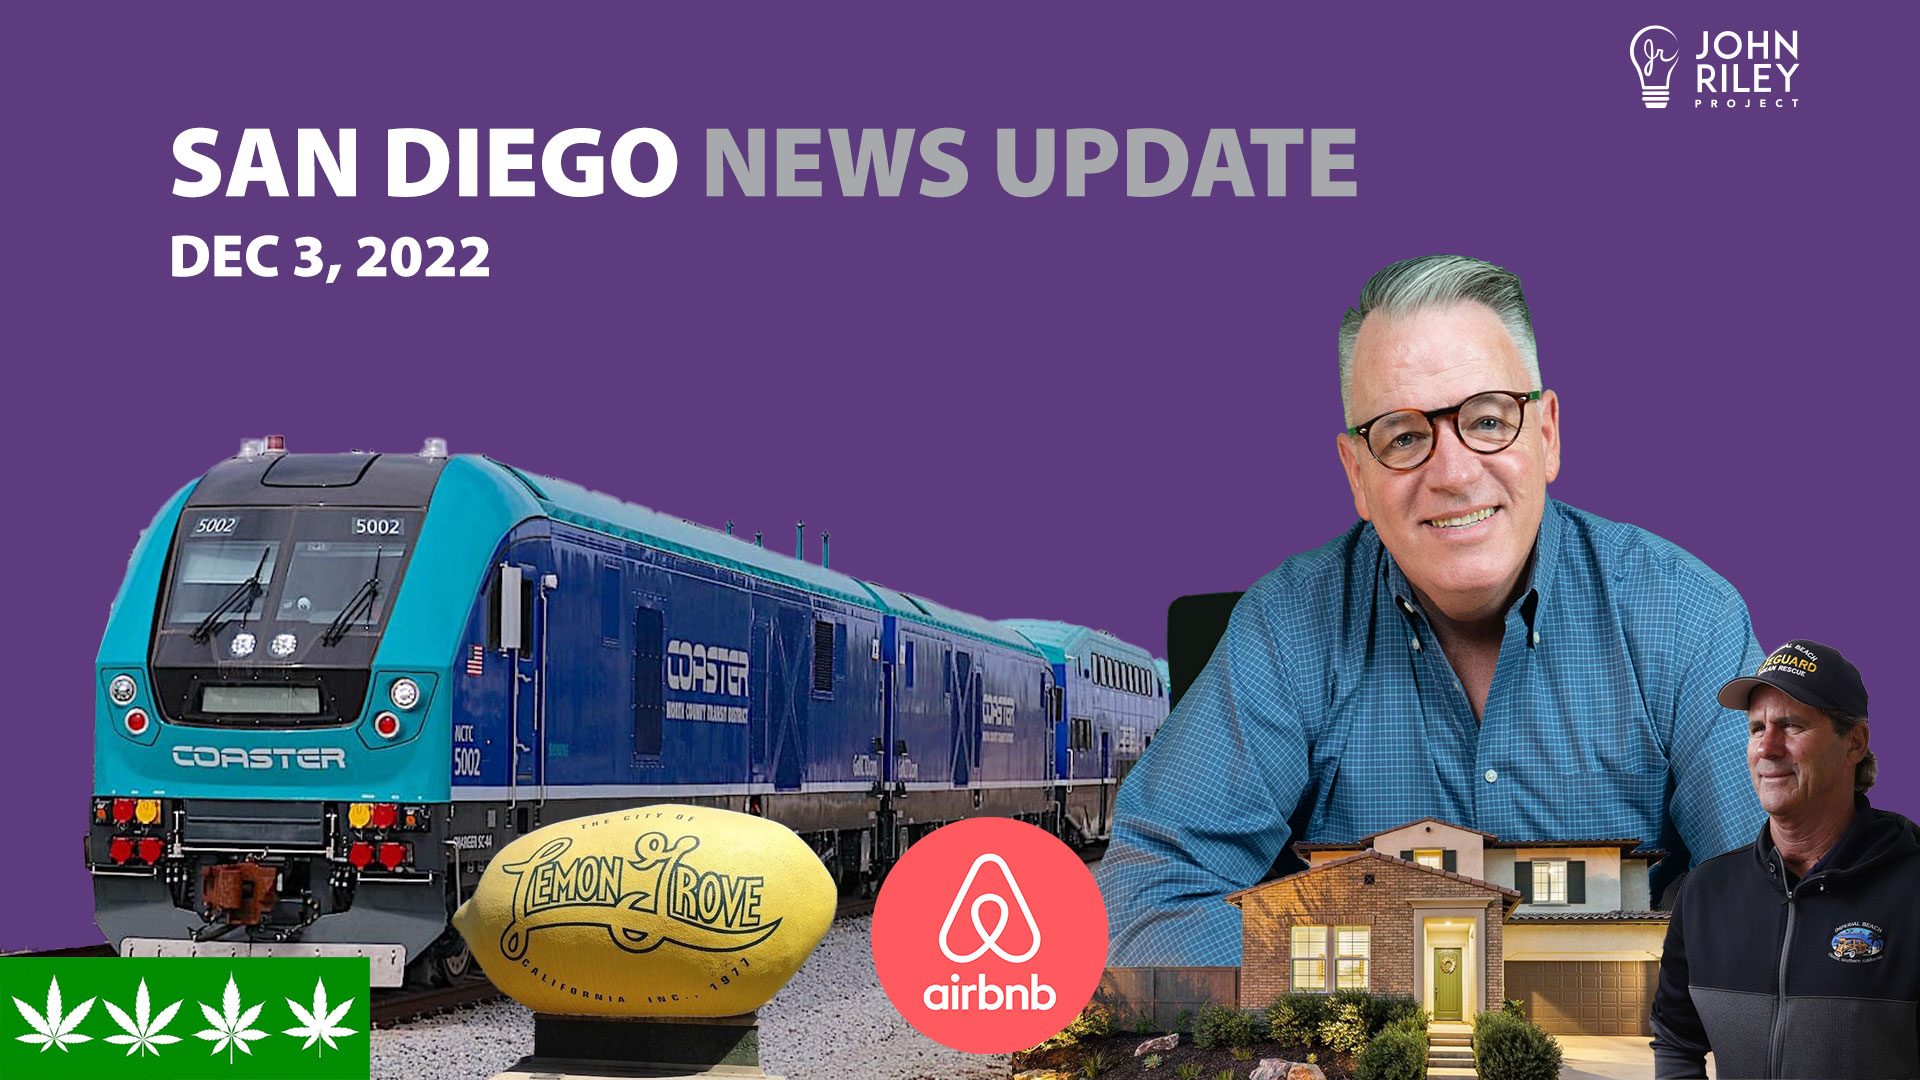 San Diego Commuter Rail, East County Cannabis, Airbnb, John Riley Project